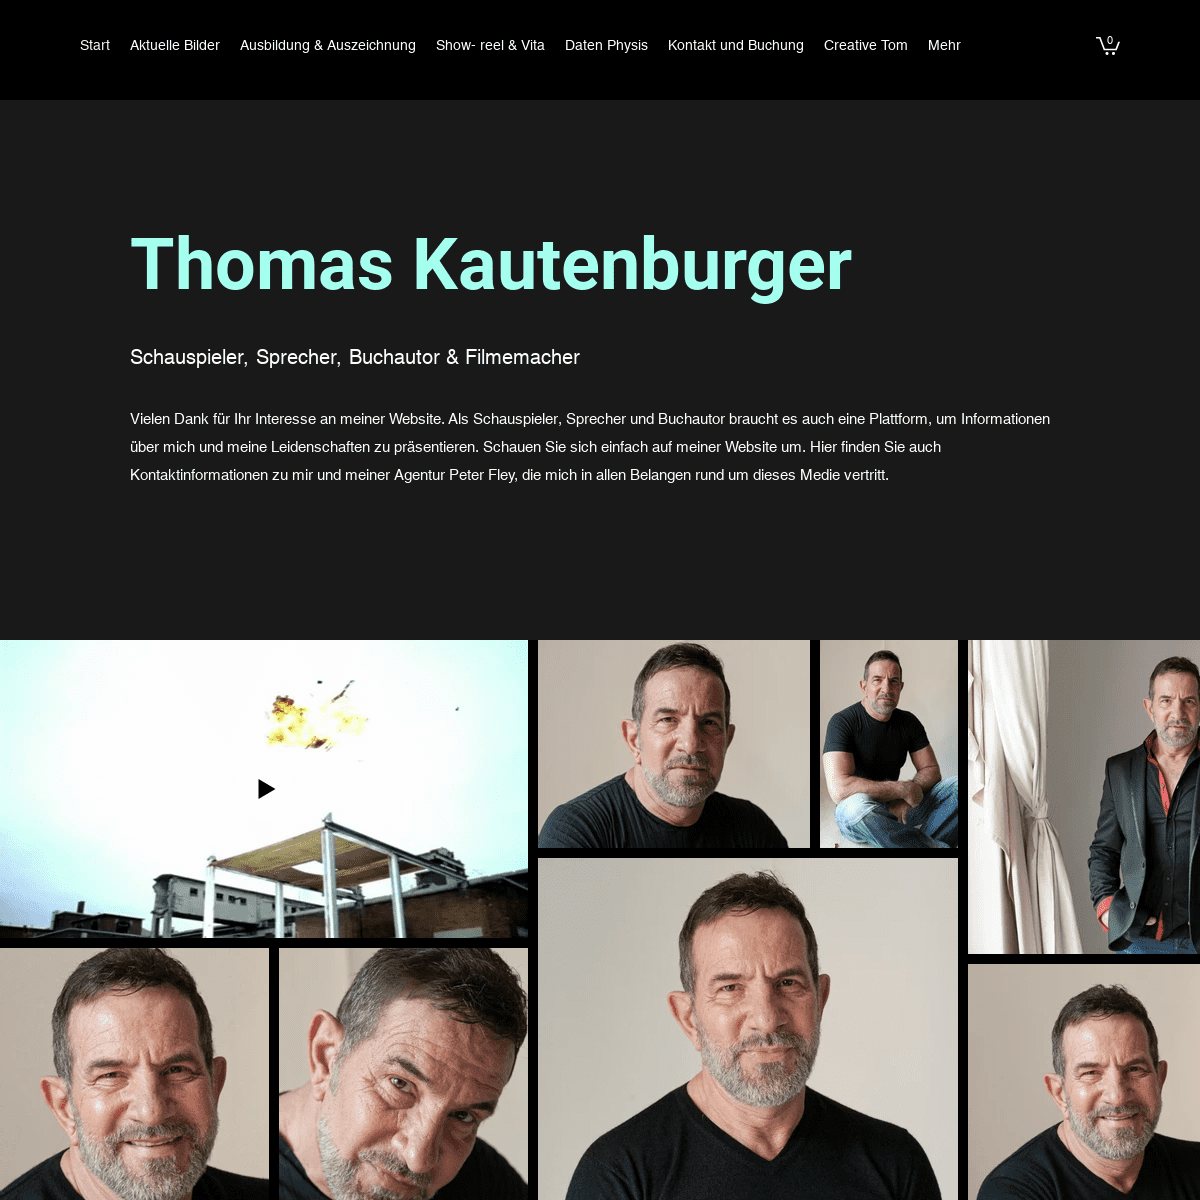 A complete backup of https://thomas-kautenburger.de